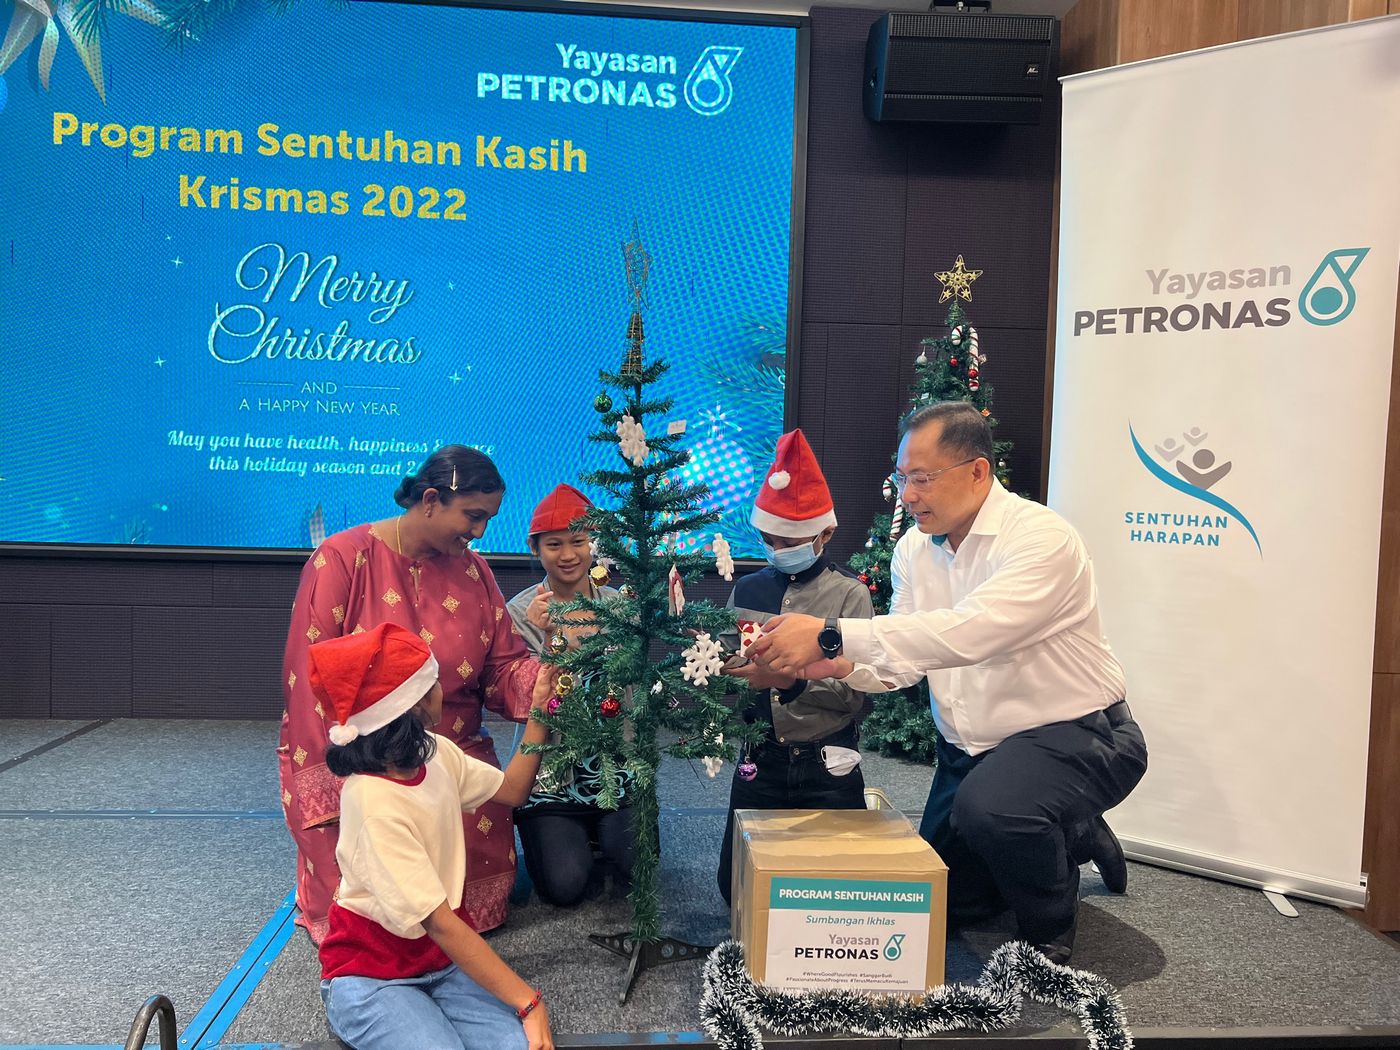 Yayasan PETRONAS Brings Christmas Joy to 3,500 Deserving Families Nationwide